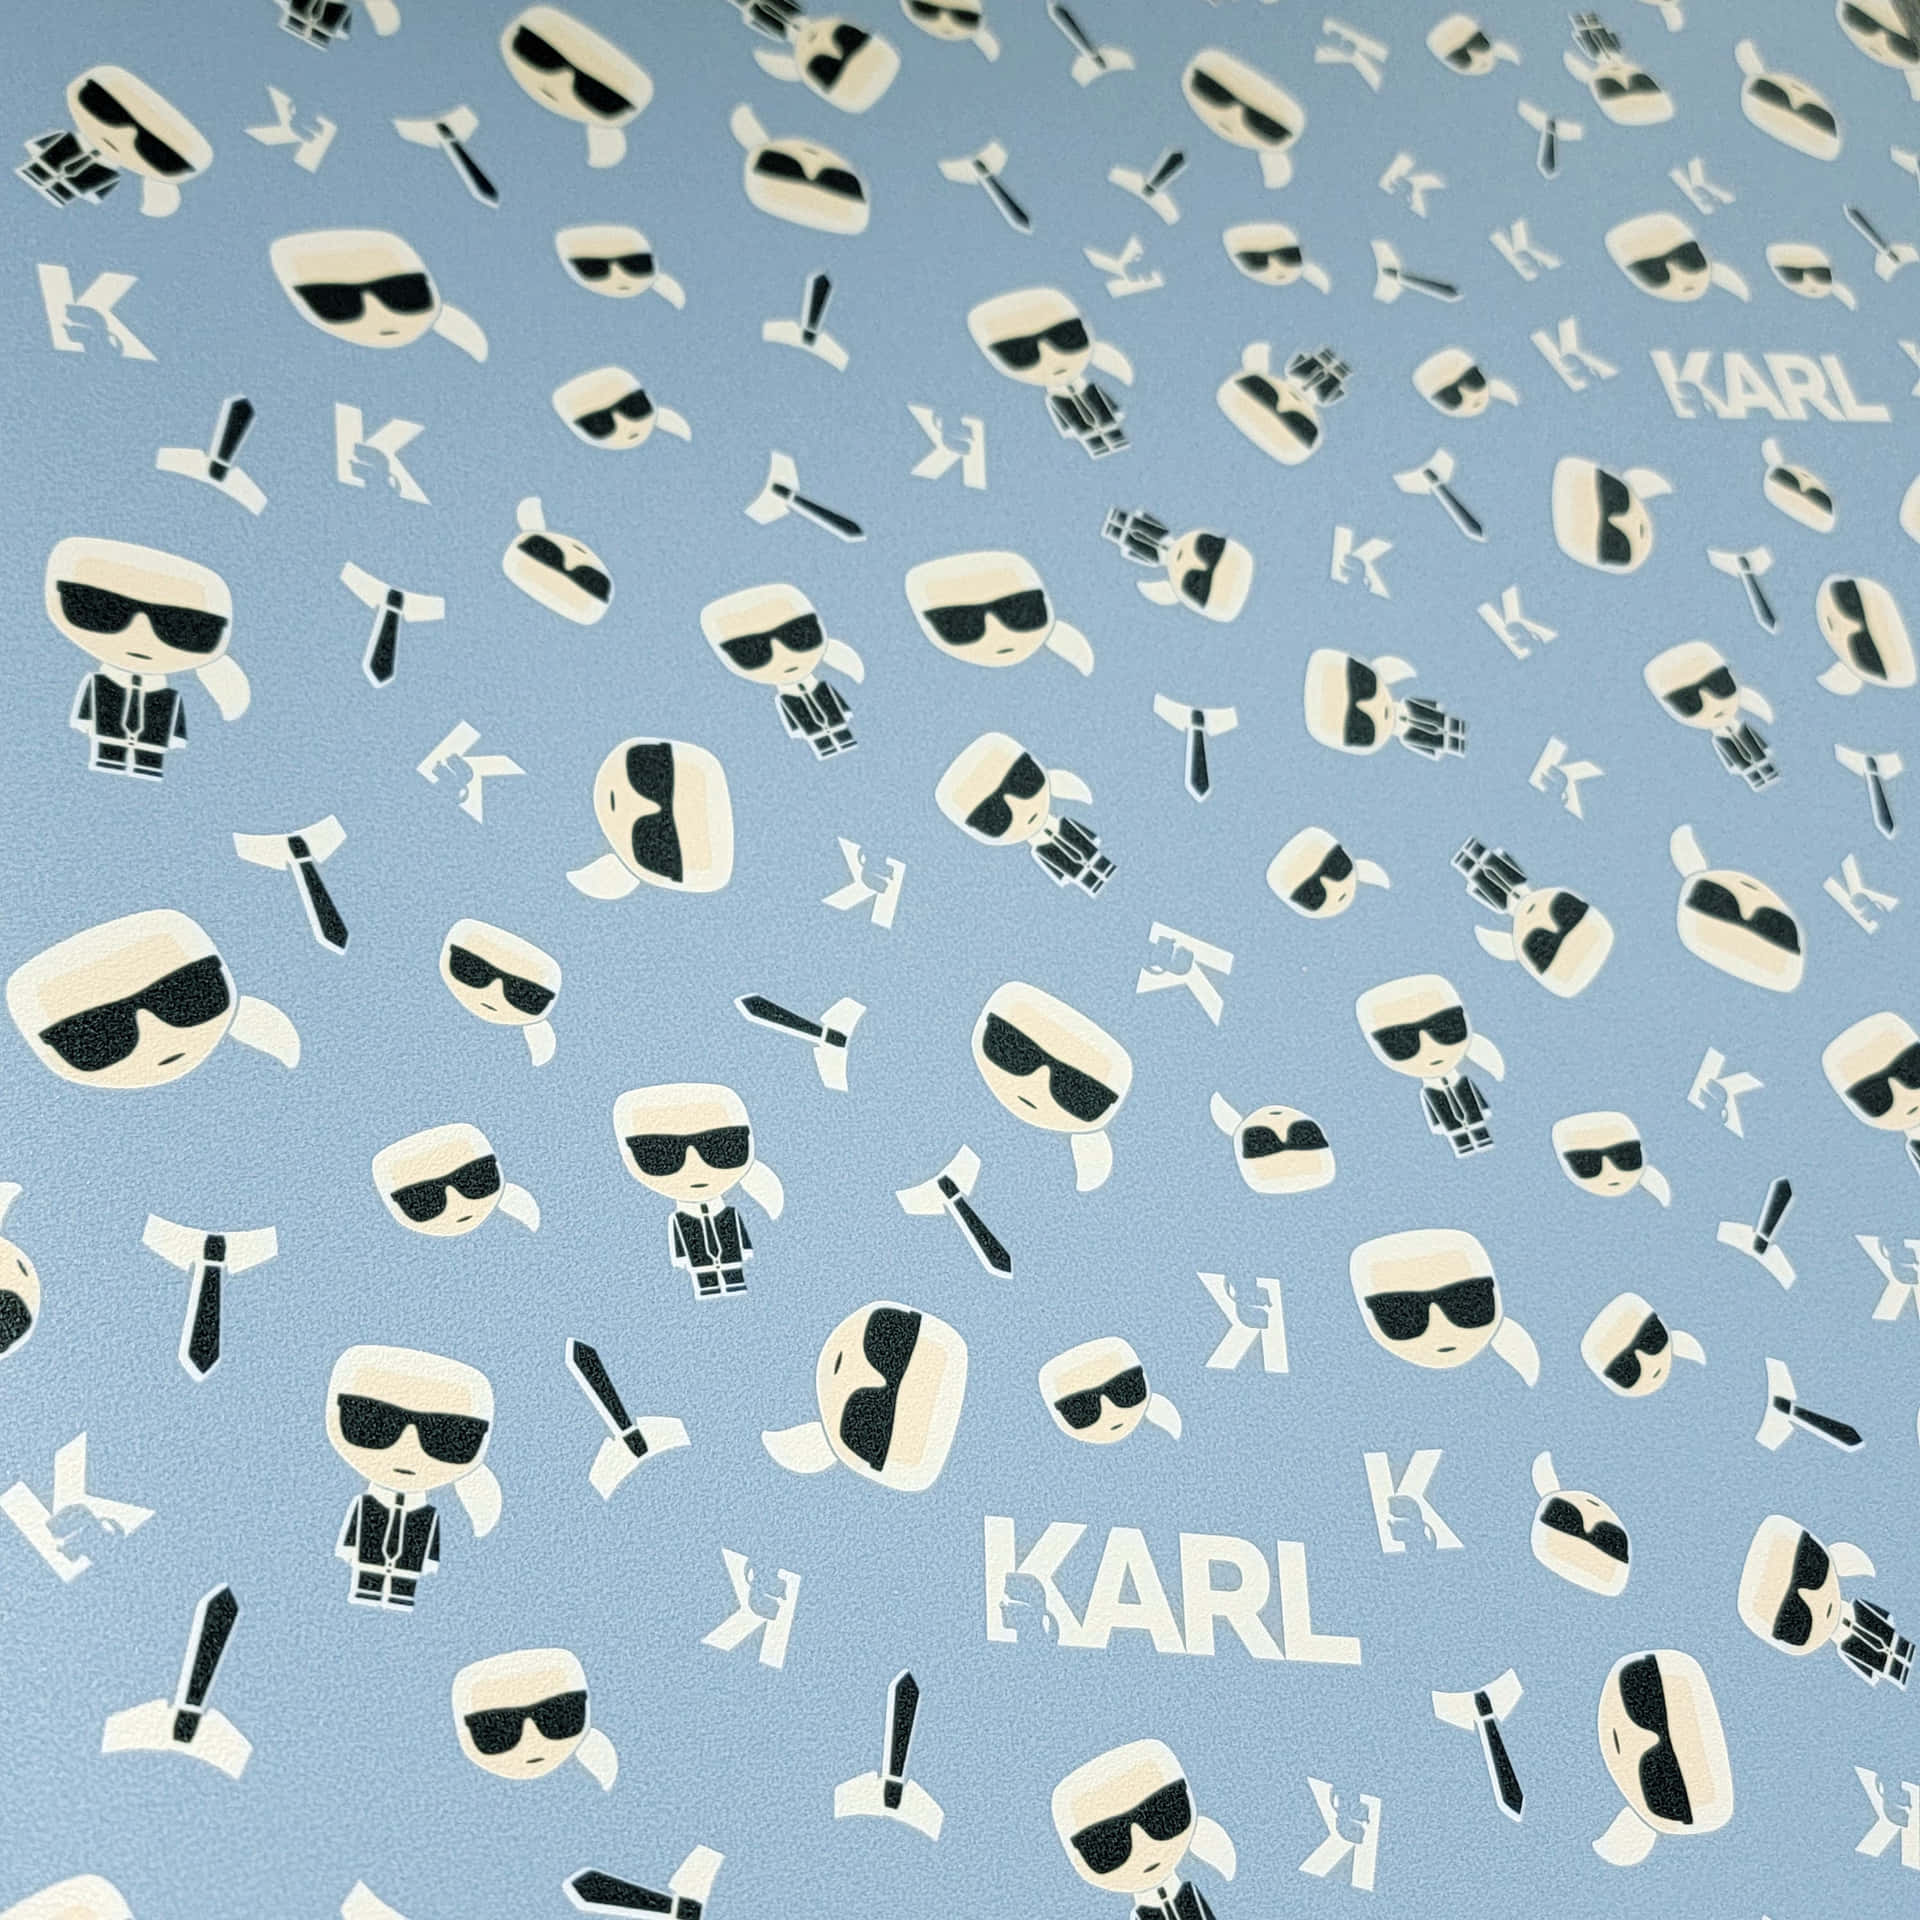 Karl Lagerfeld – Iconic Fashion Designer Wallpaper